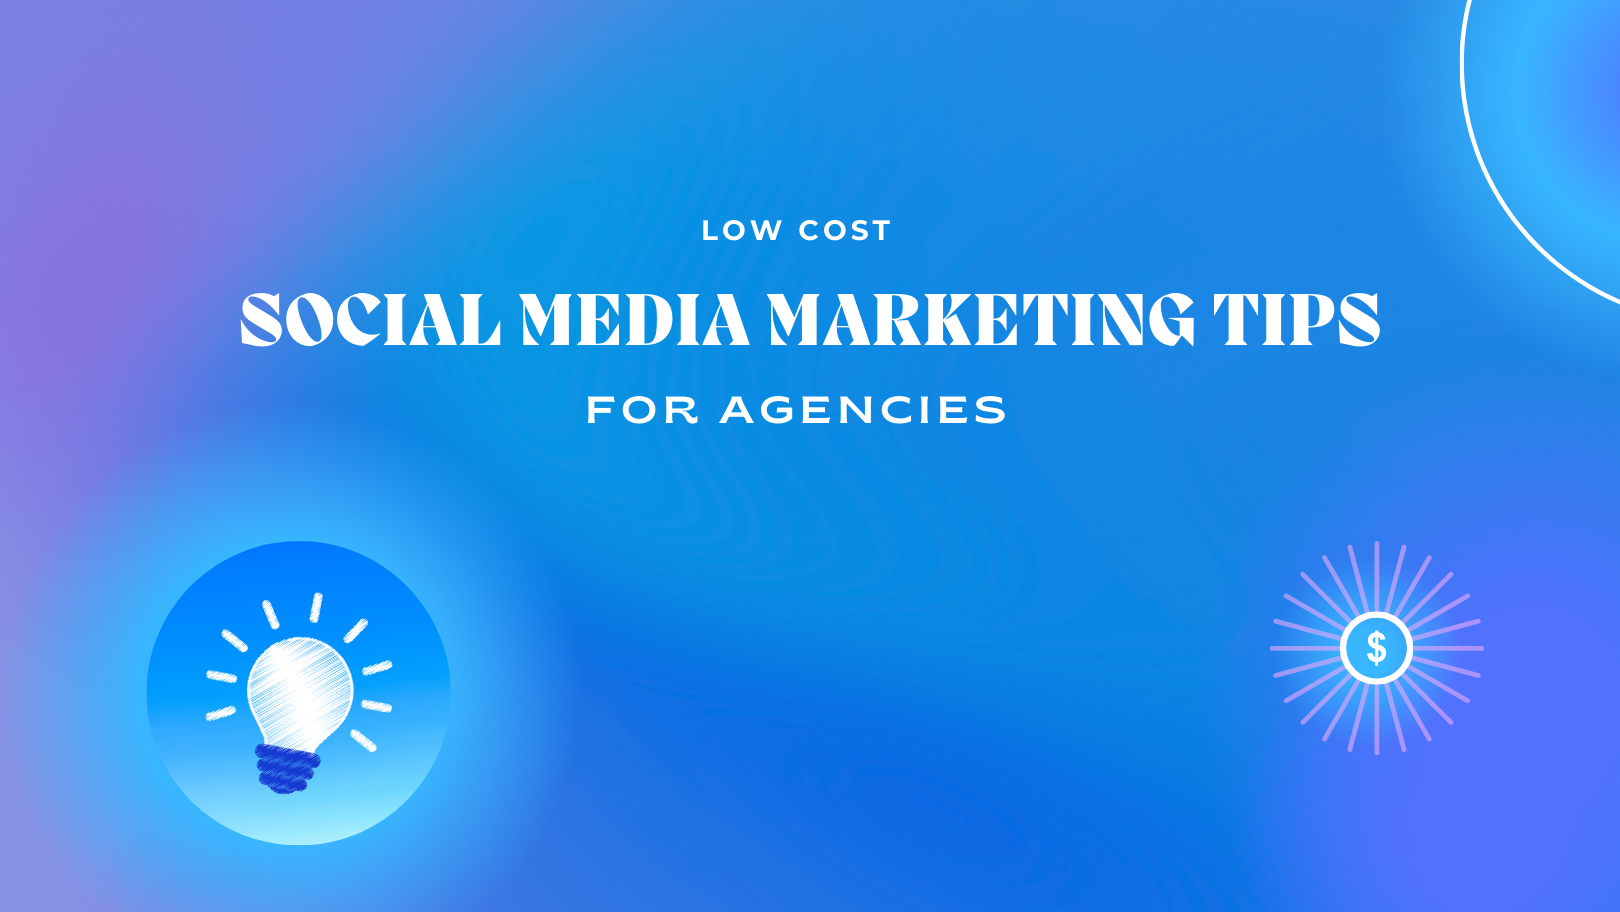 Low Cost Social Media Marketing Tips for Agencies